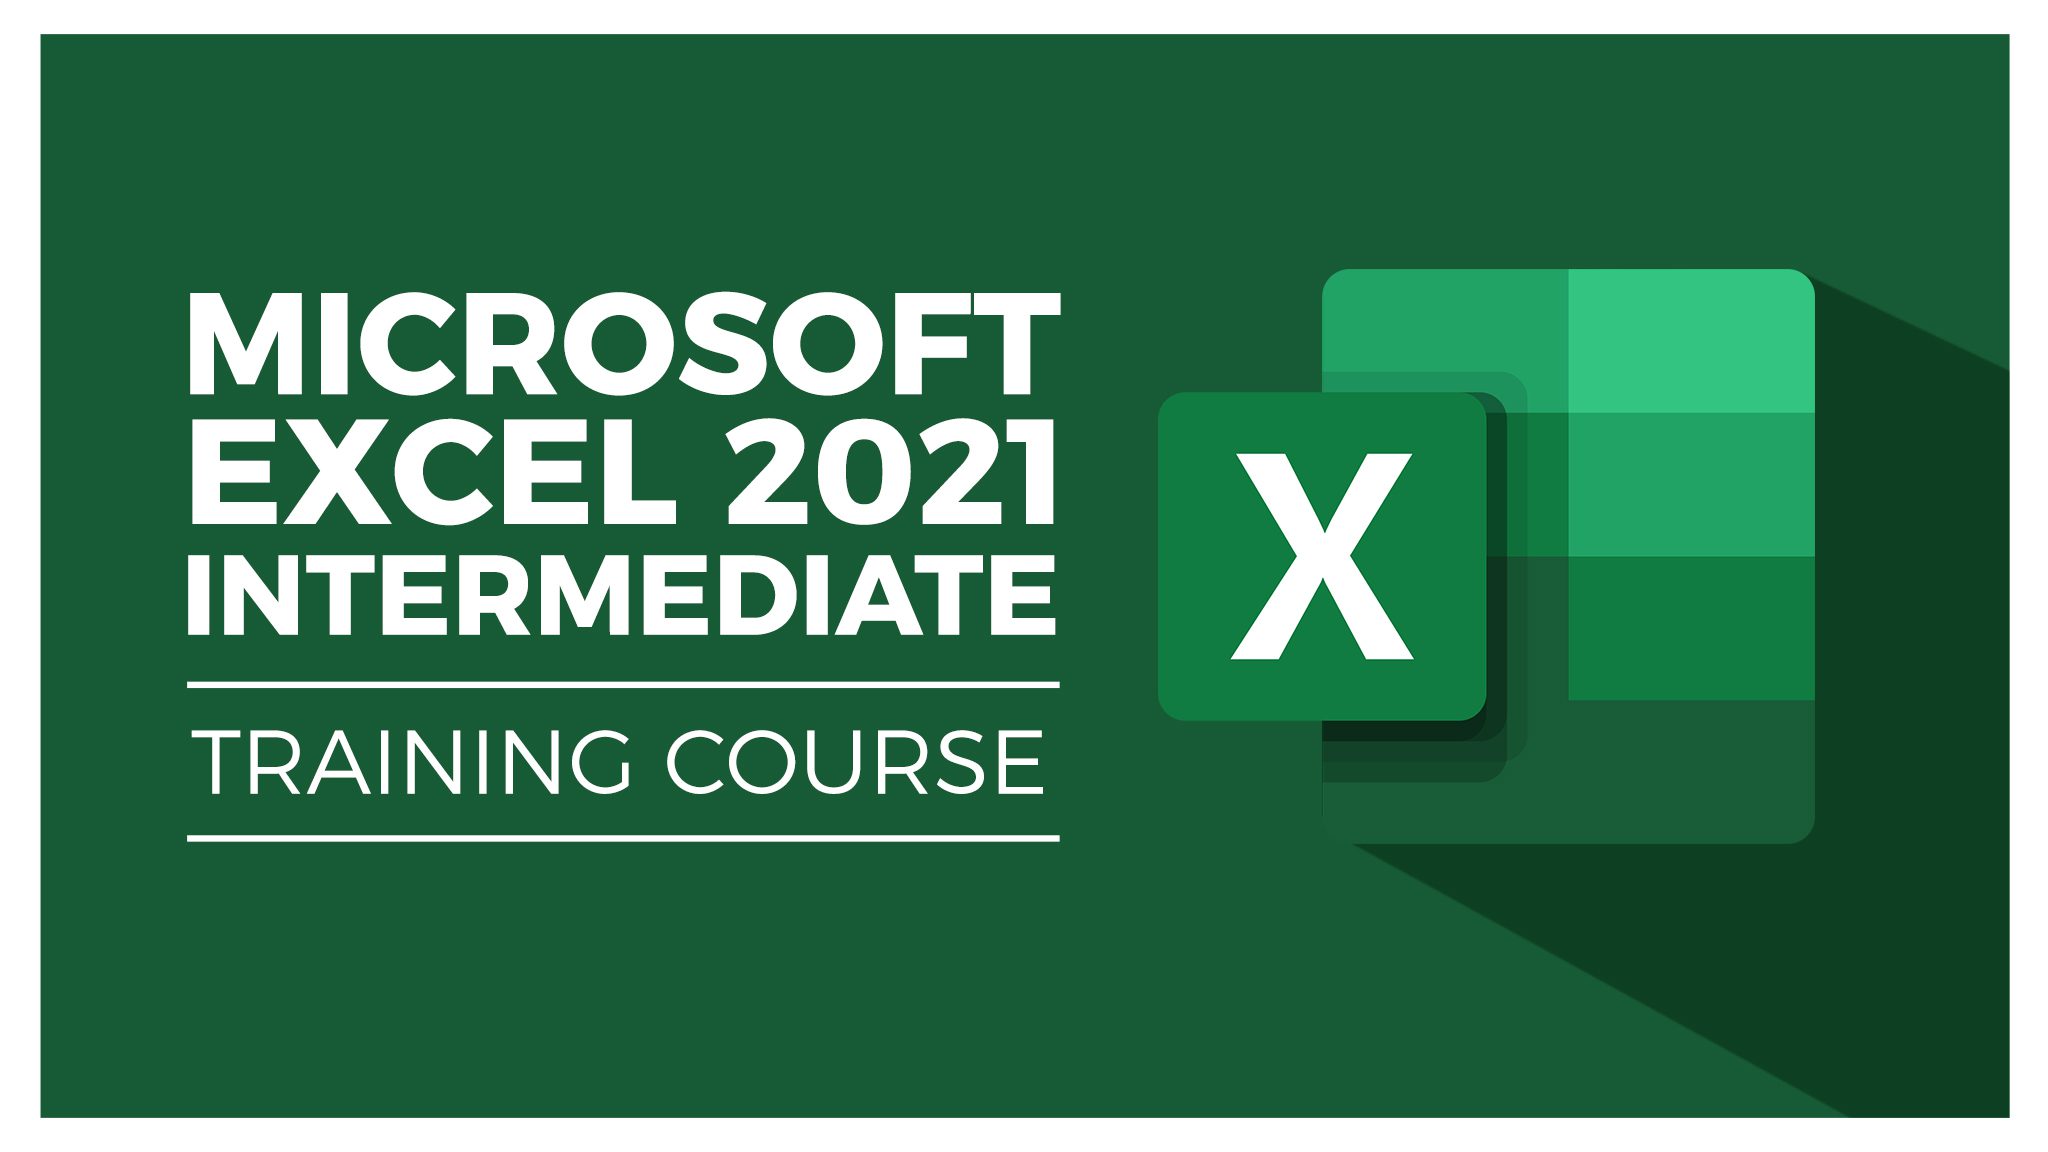 Simon Sez IT - Microsoft Excel 2021 Intermediate Training Course1